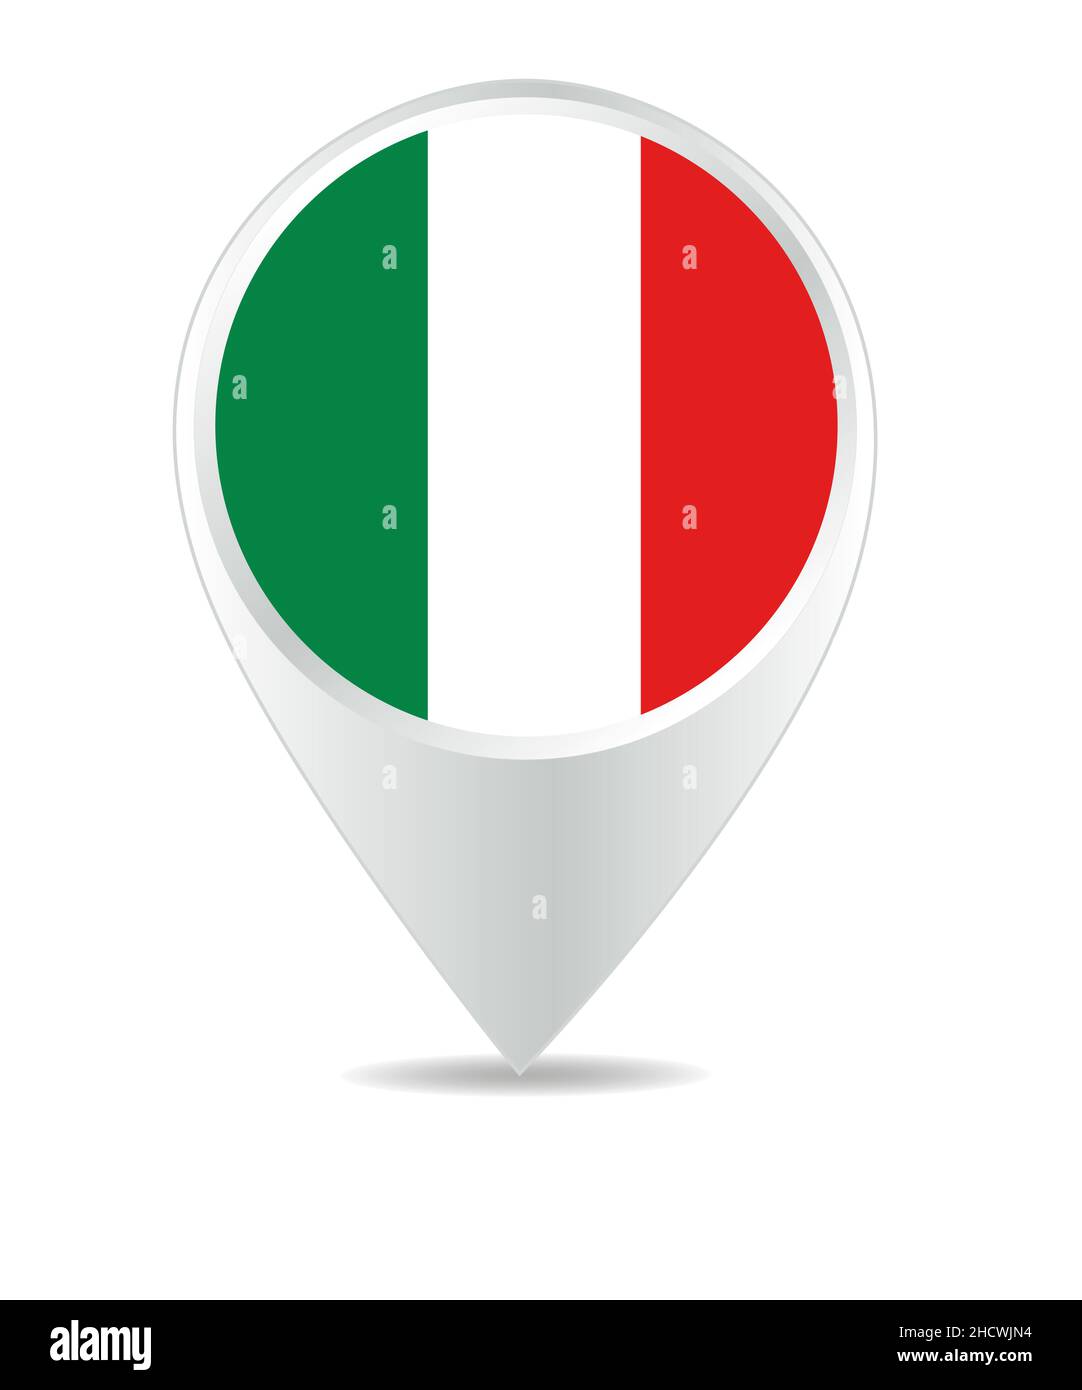 Location Icon for ItalyFlag, Vector Stock Photo